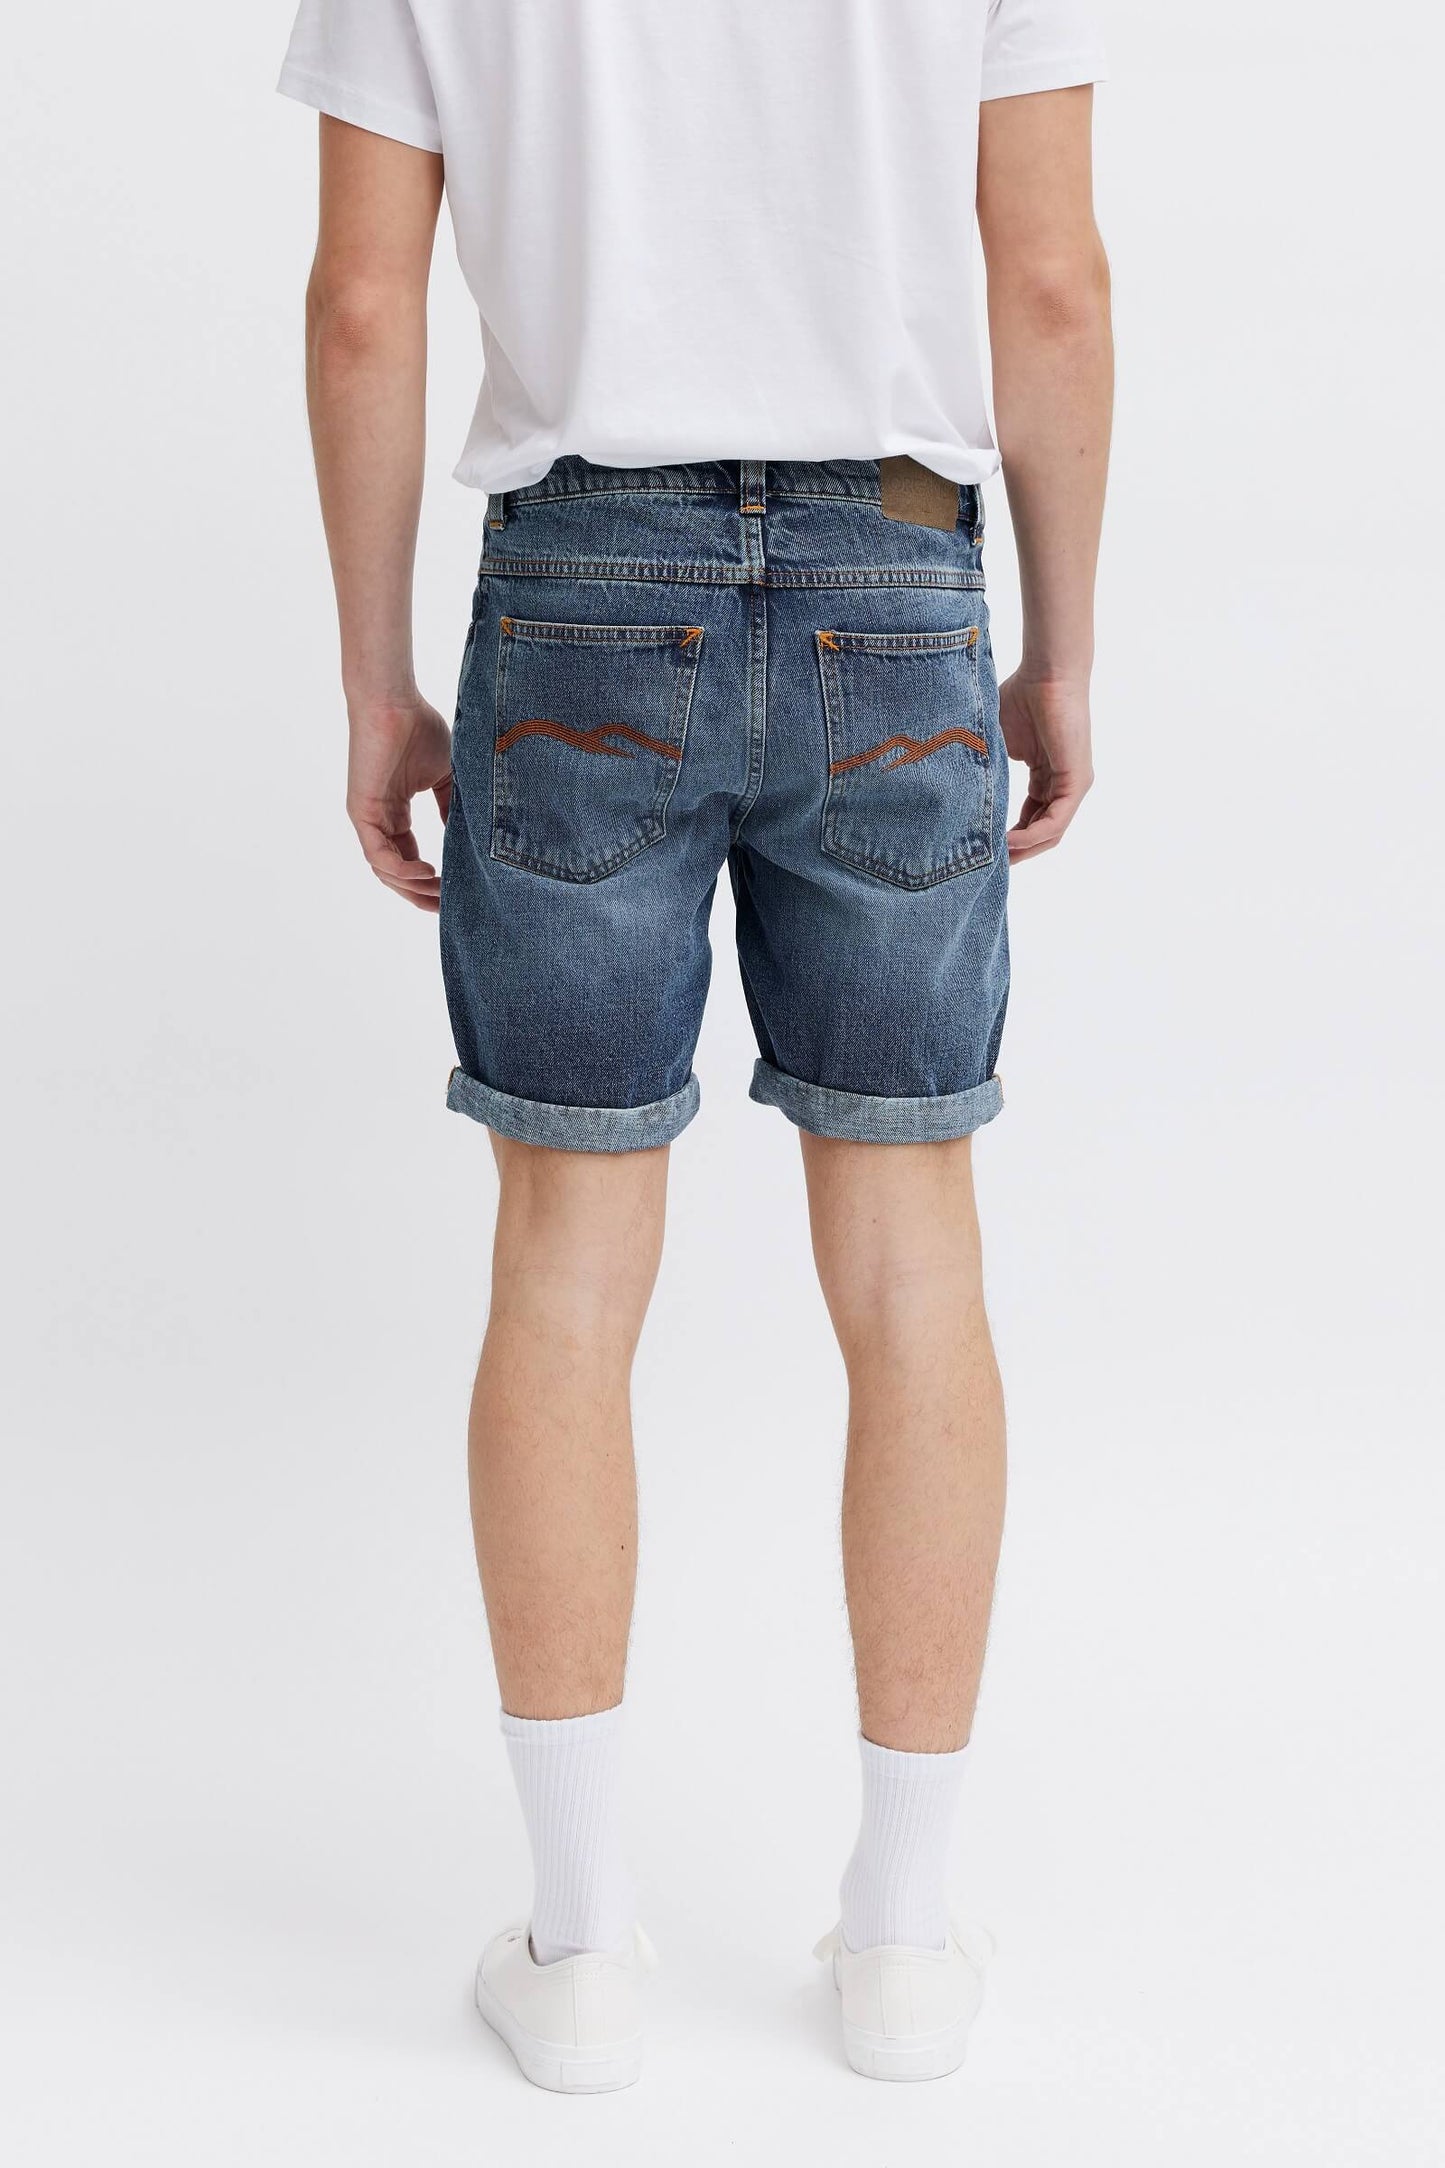 ethical denim  shorts for men. Comfy style